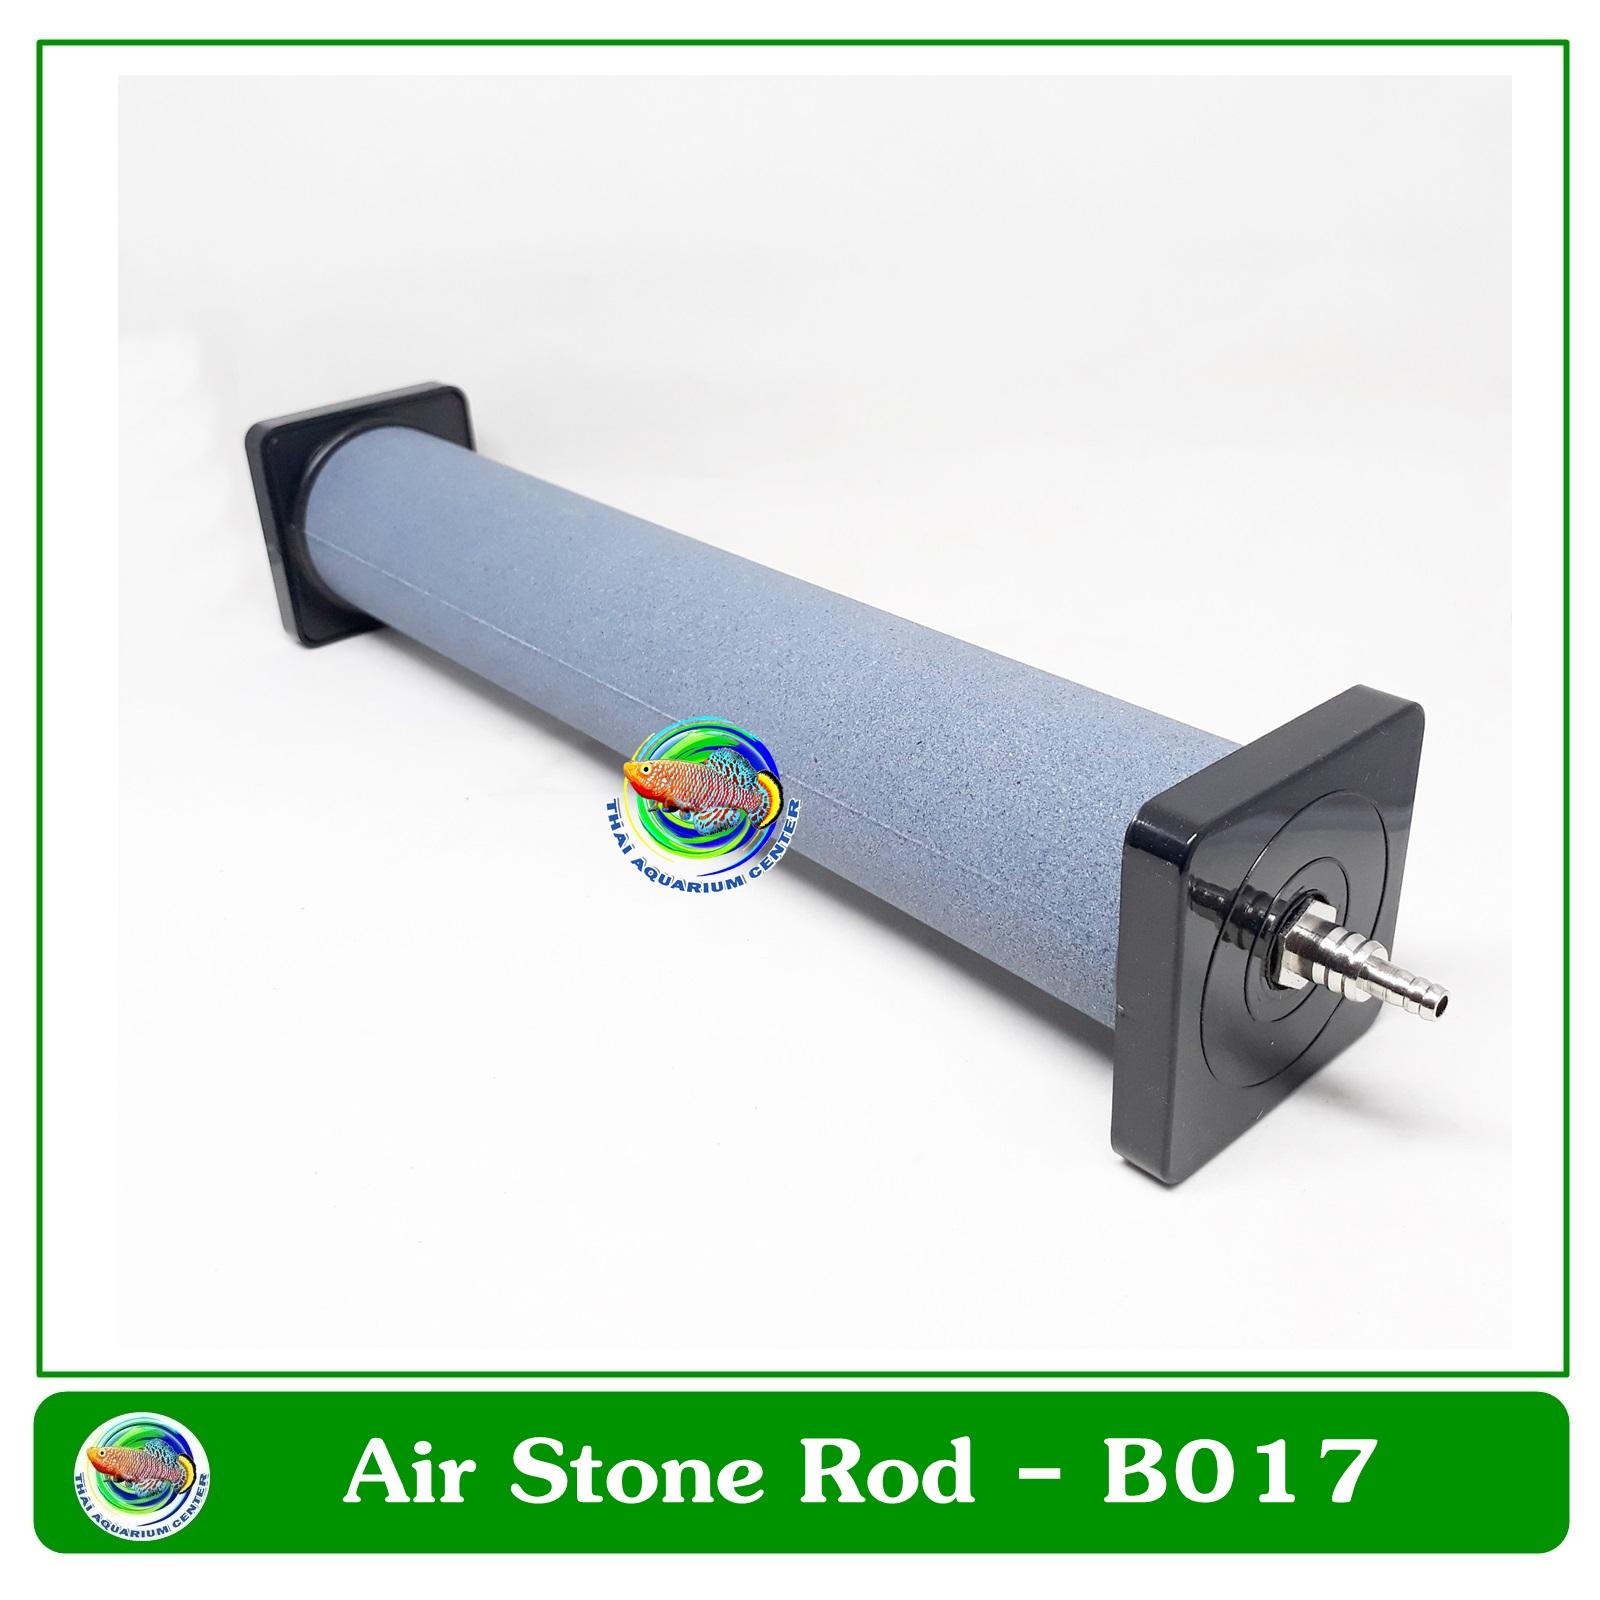 Air Stone หัวทรายละเอียดทรงกระบอก B017  ยาว 15 ซม.